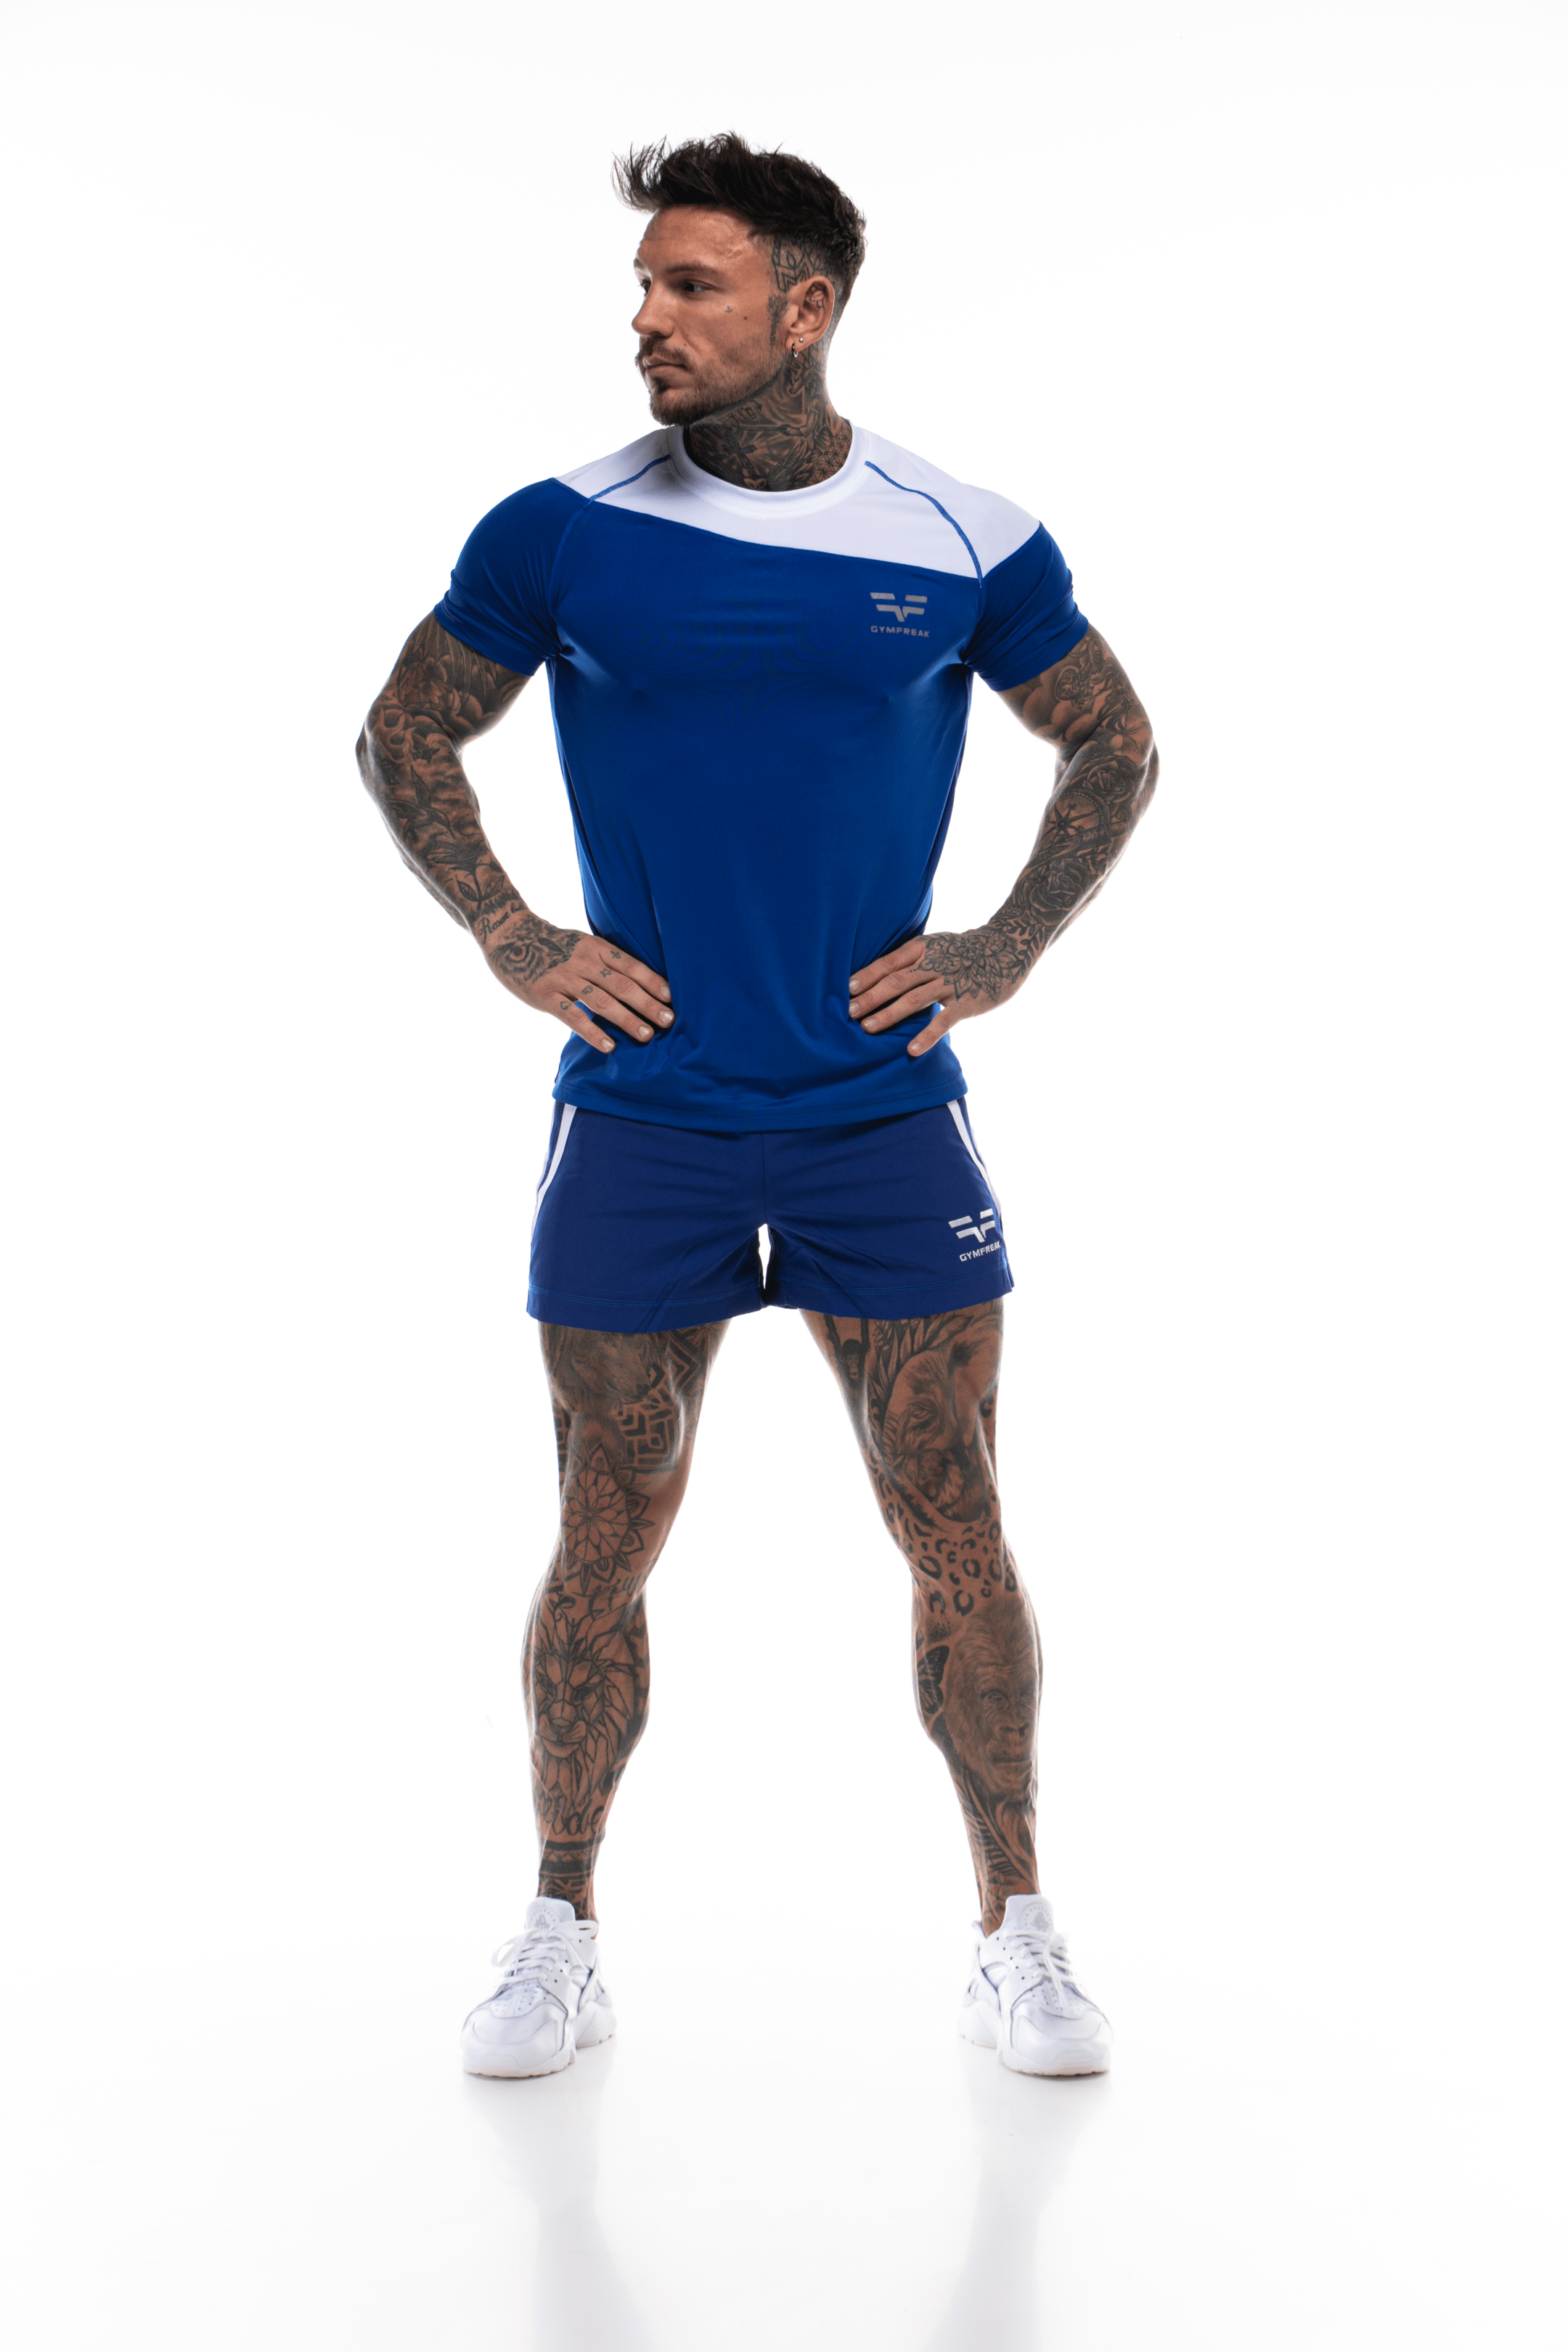 GymFreak Mens Pro Shorts - Blue - 3.5 inch